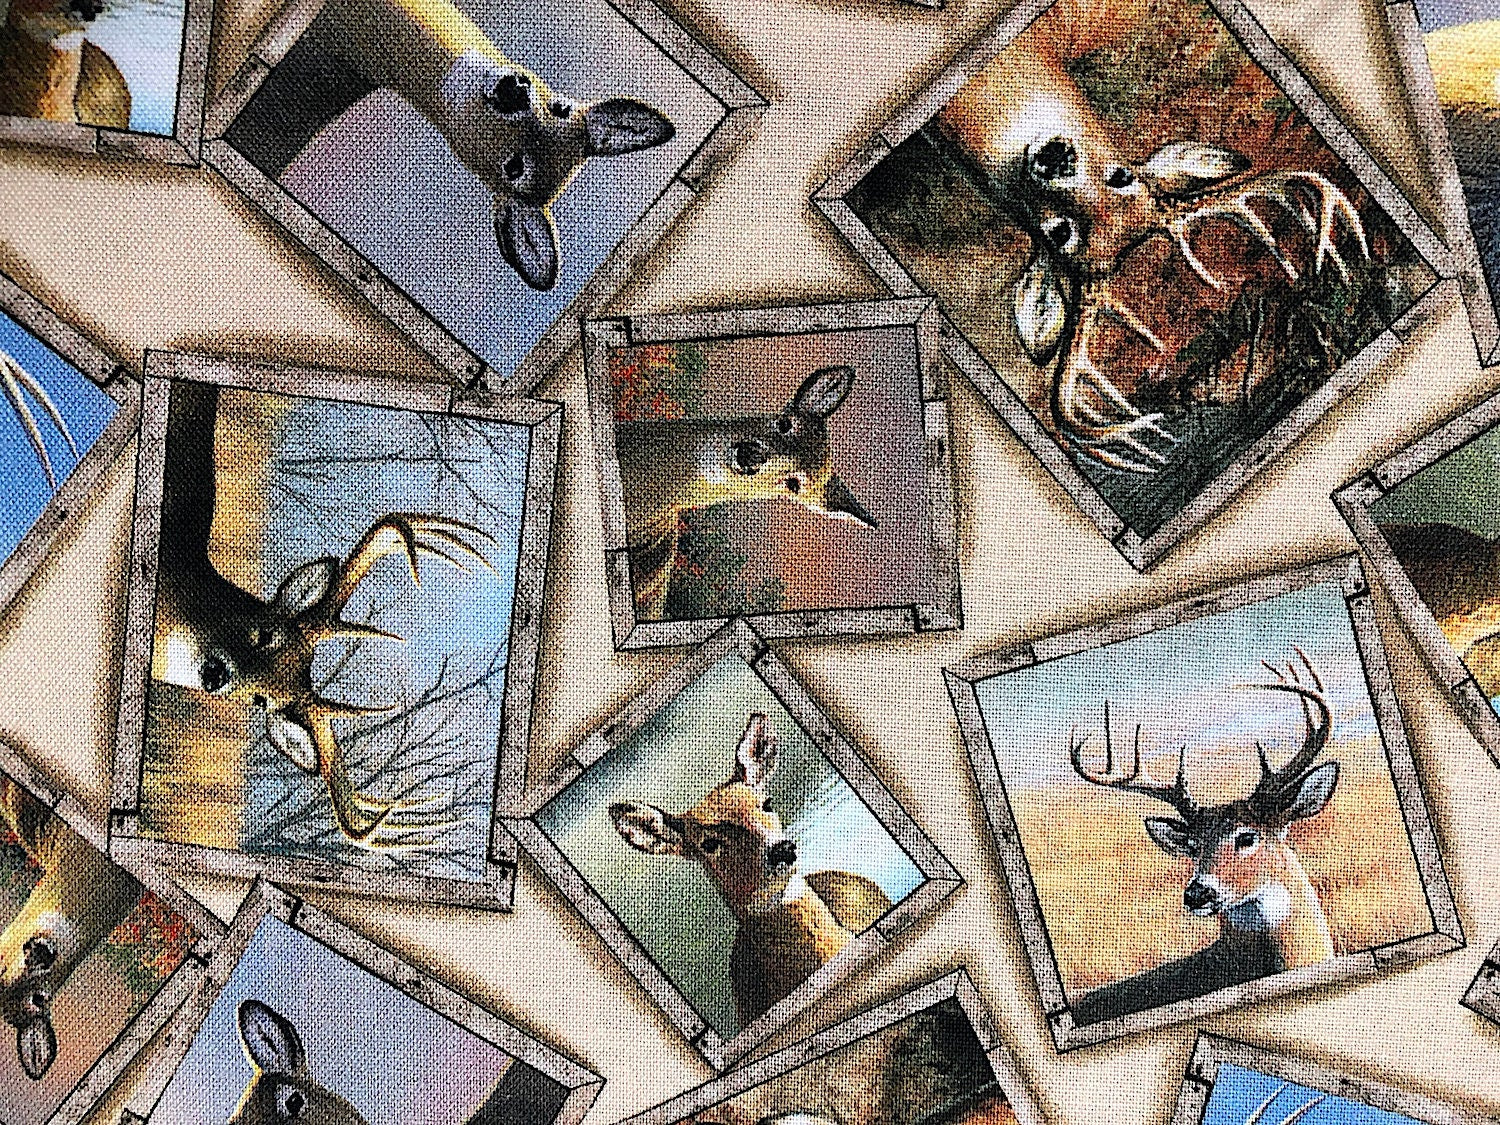 Pictures of deer in frames.